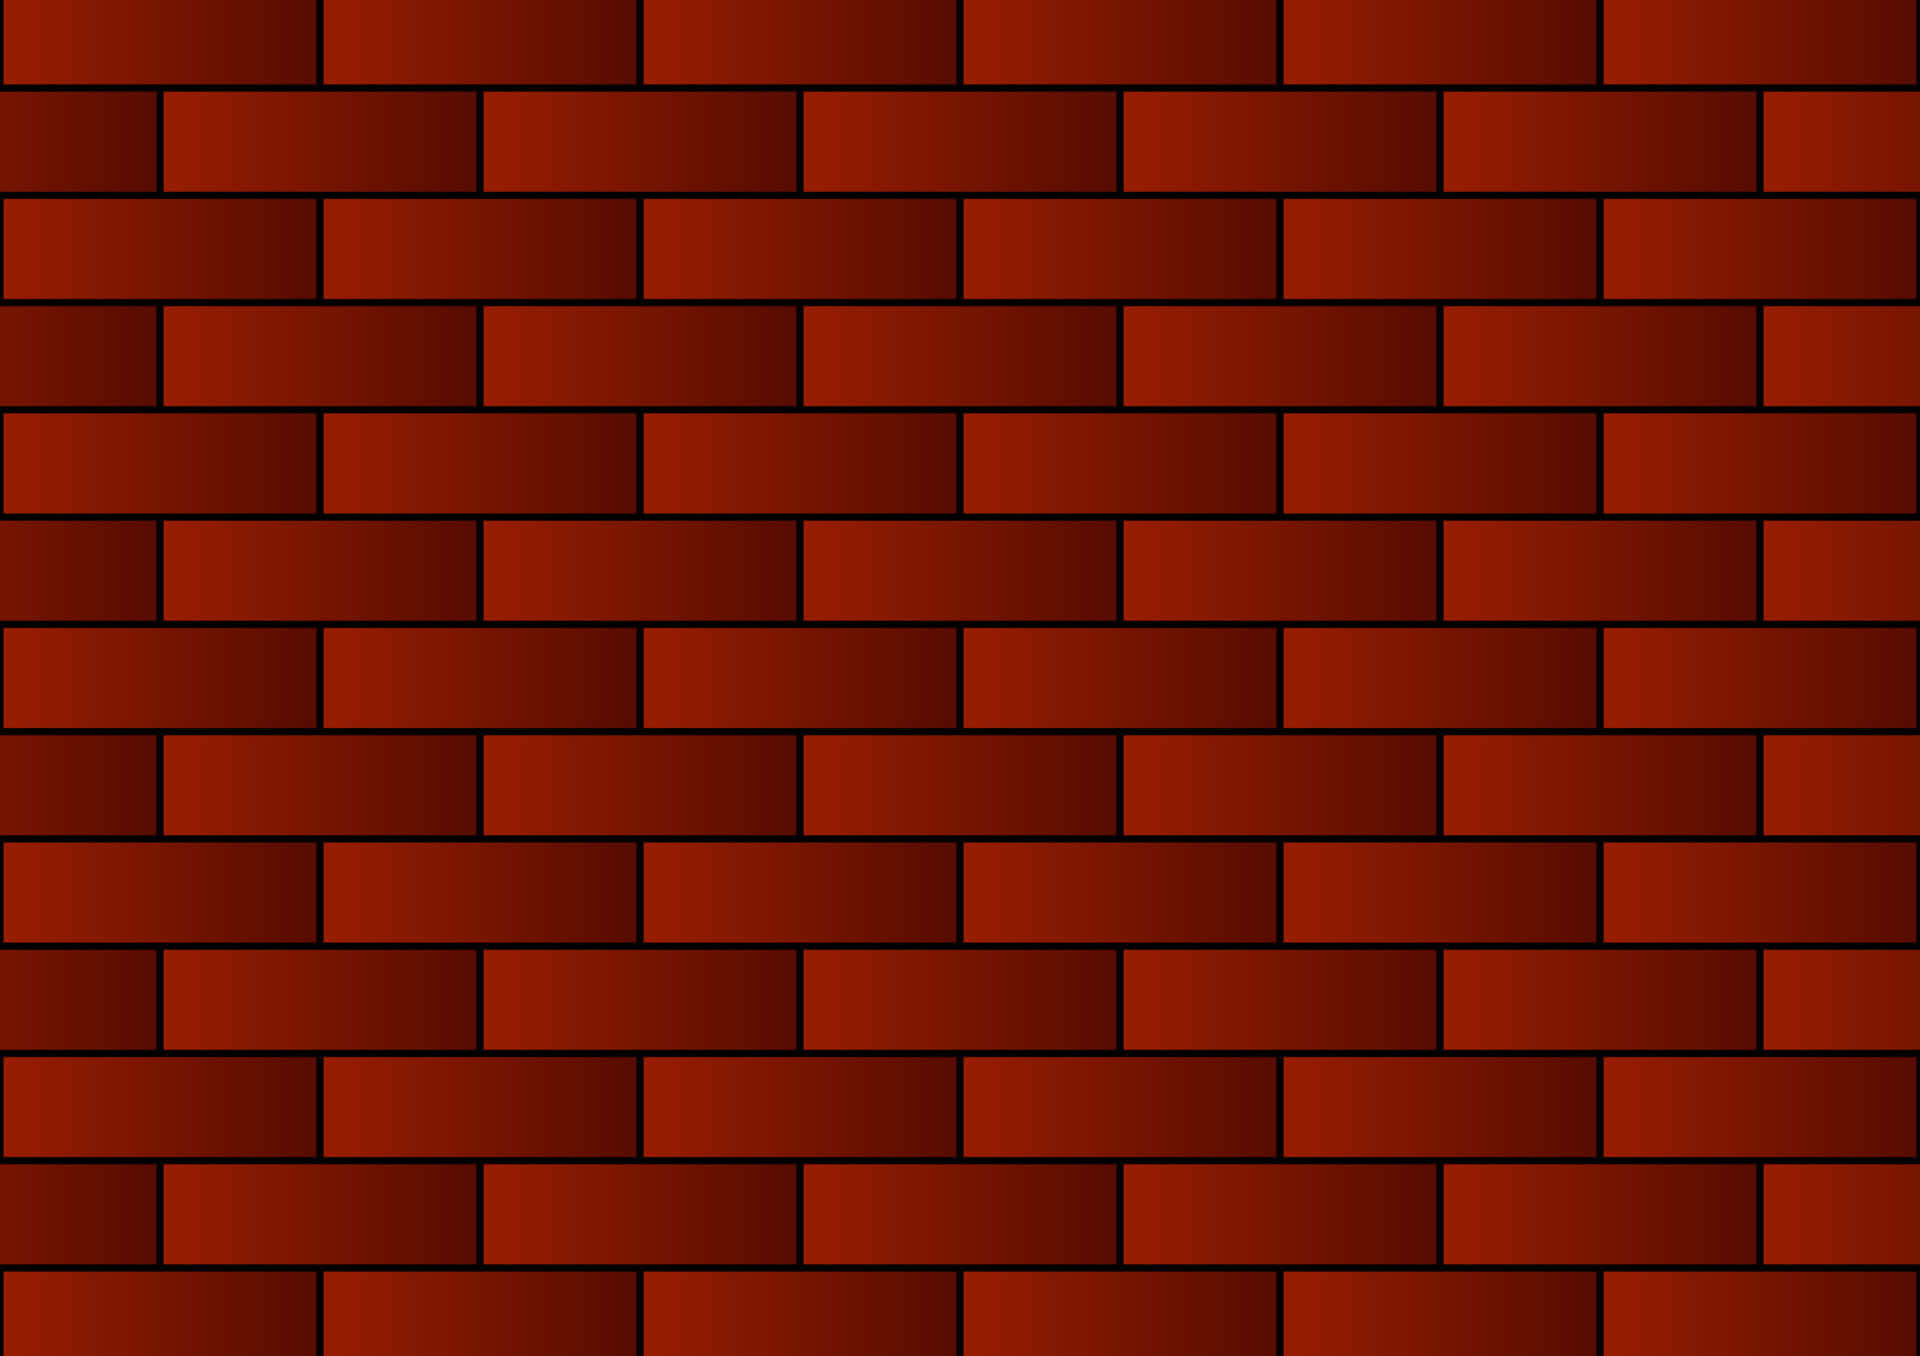 Textured Brick Wall Background